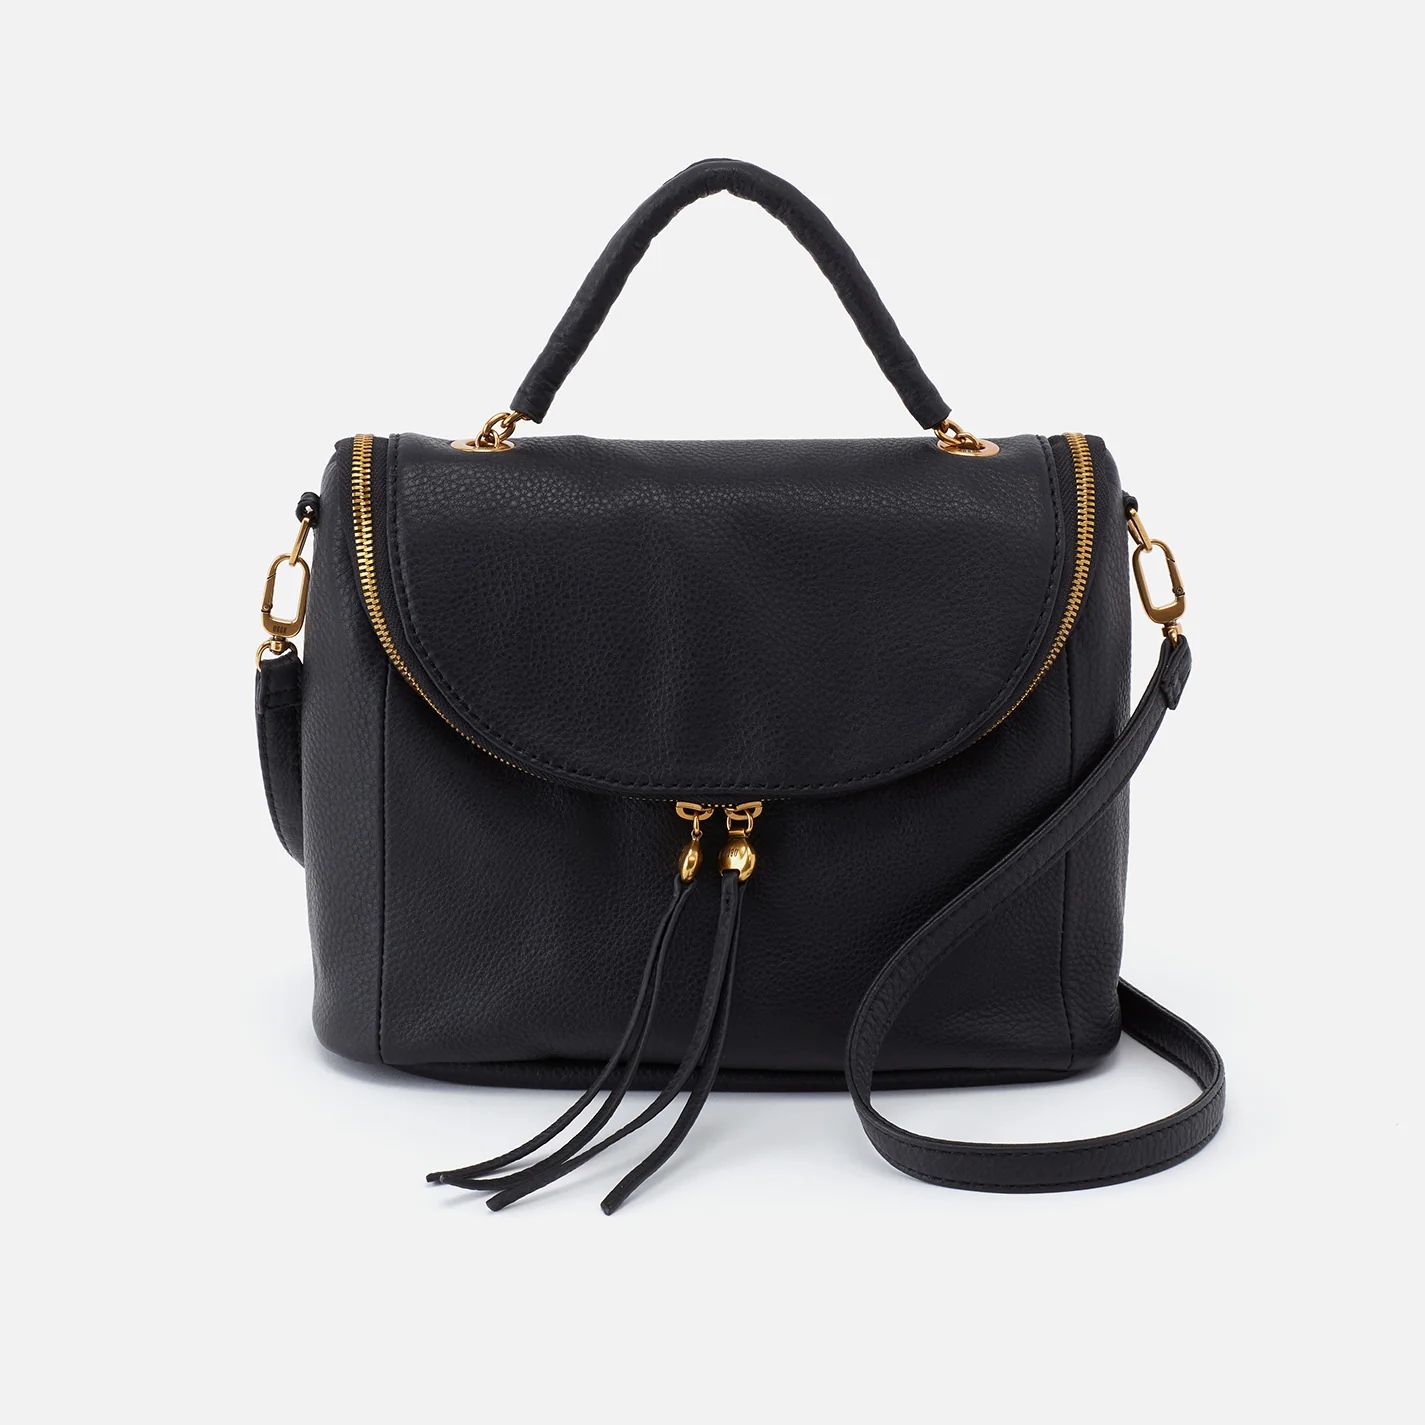 Fern Satchel in Pebbled Leather - Black | HOBO Bags